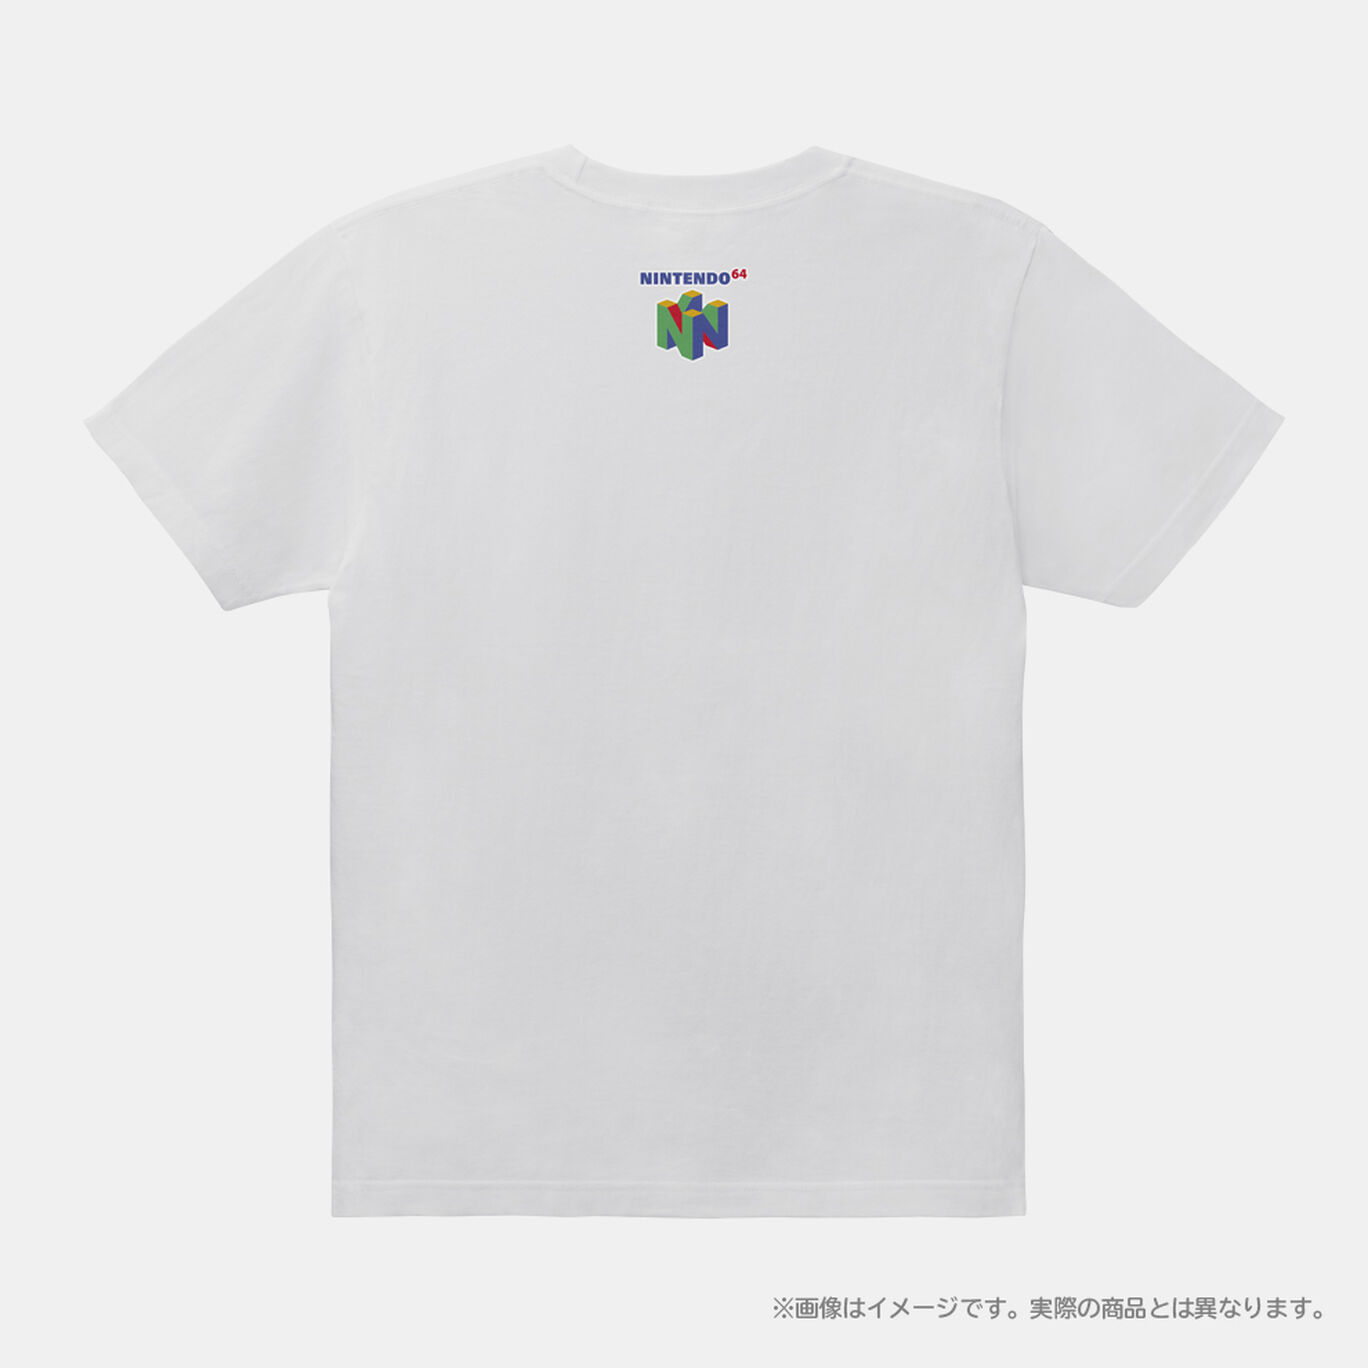 Nintendo Switch Online ＋ 追加パック加入者限定 Tシャツ NINTENDO 64 S